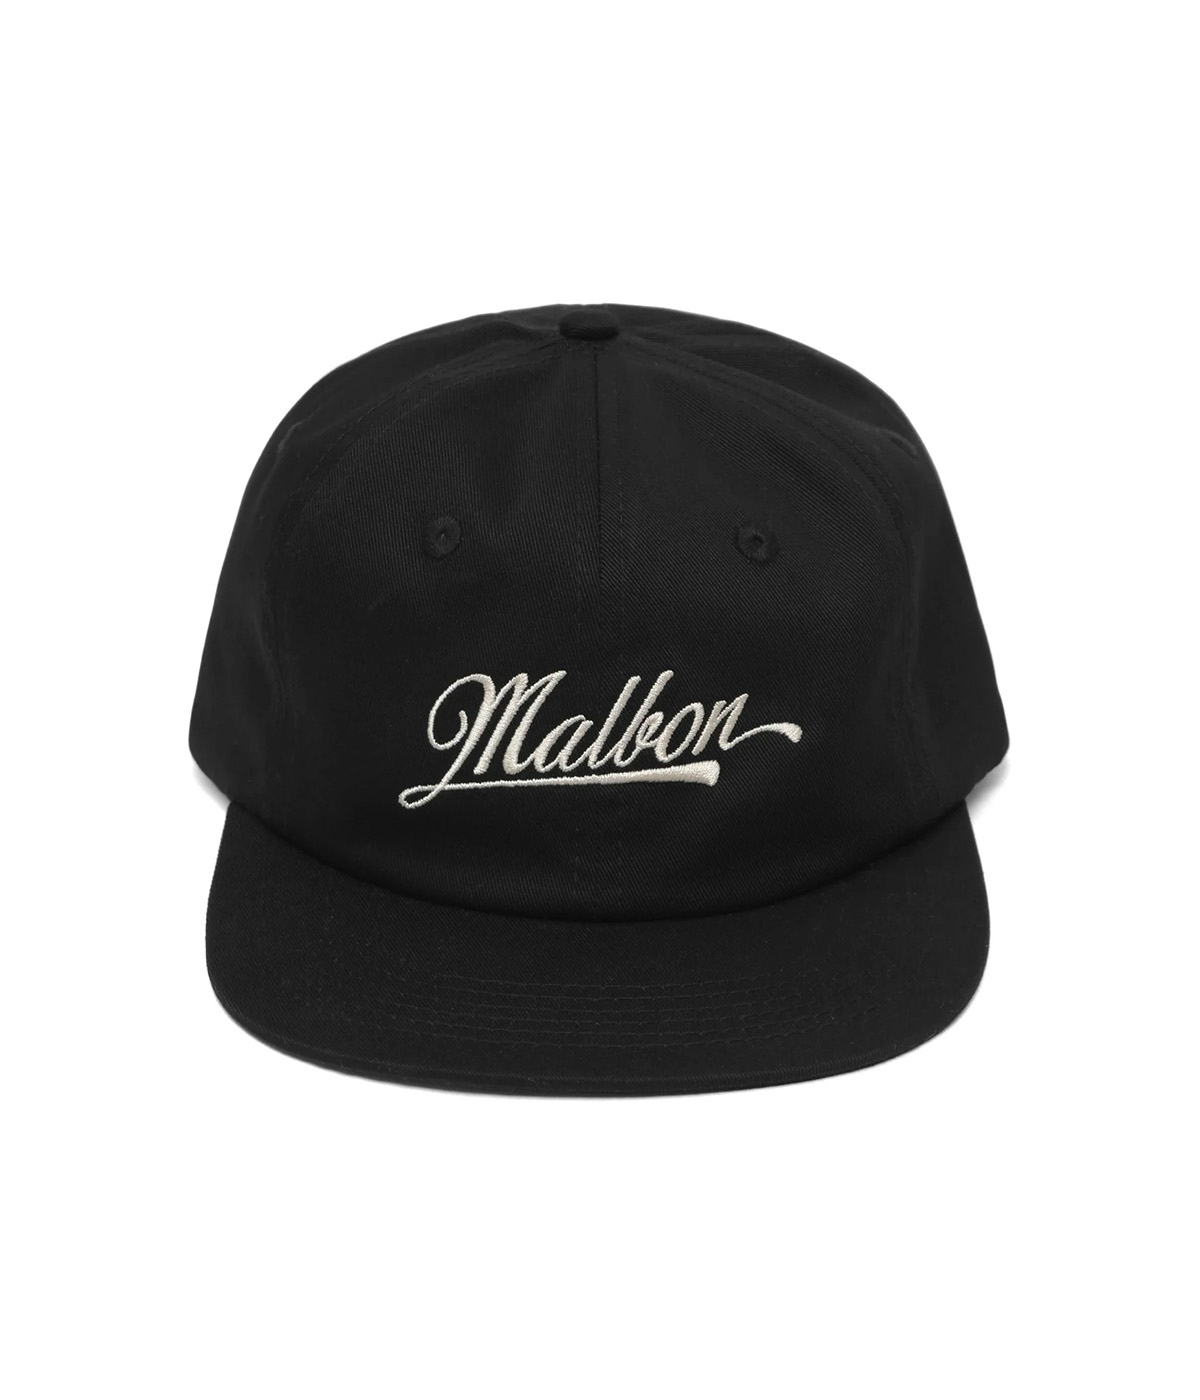 Malbon Golf Hat Wyatt Black 1